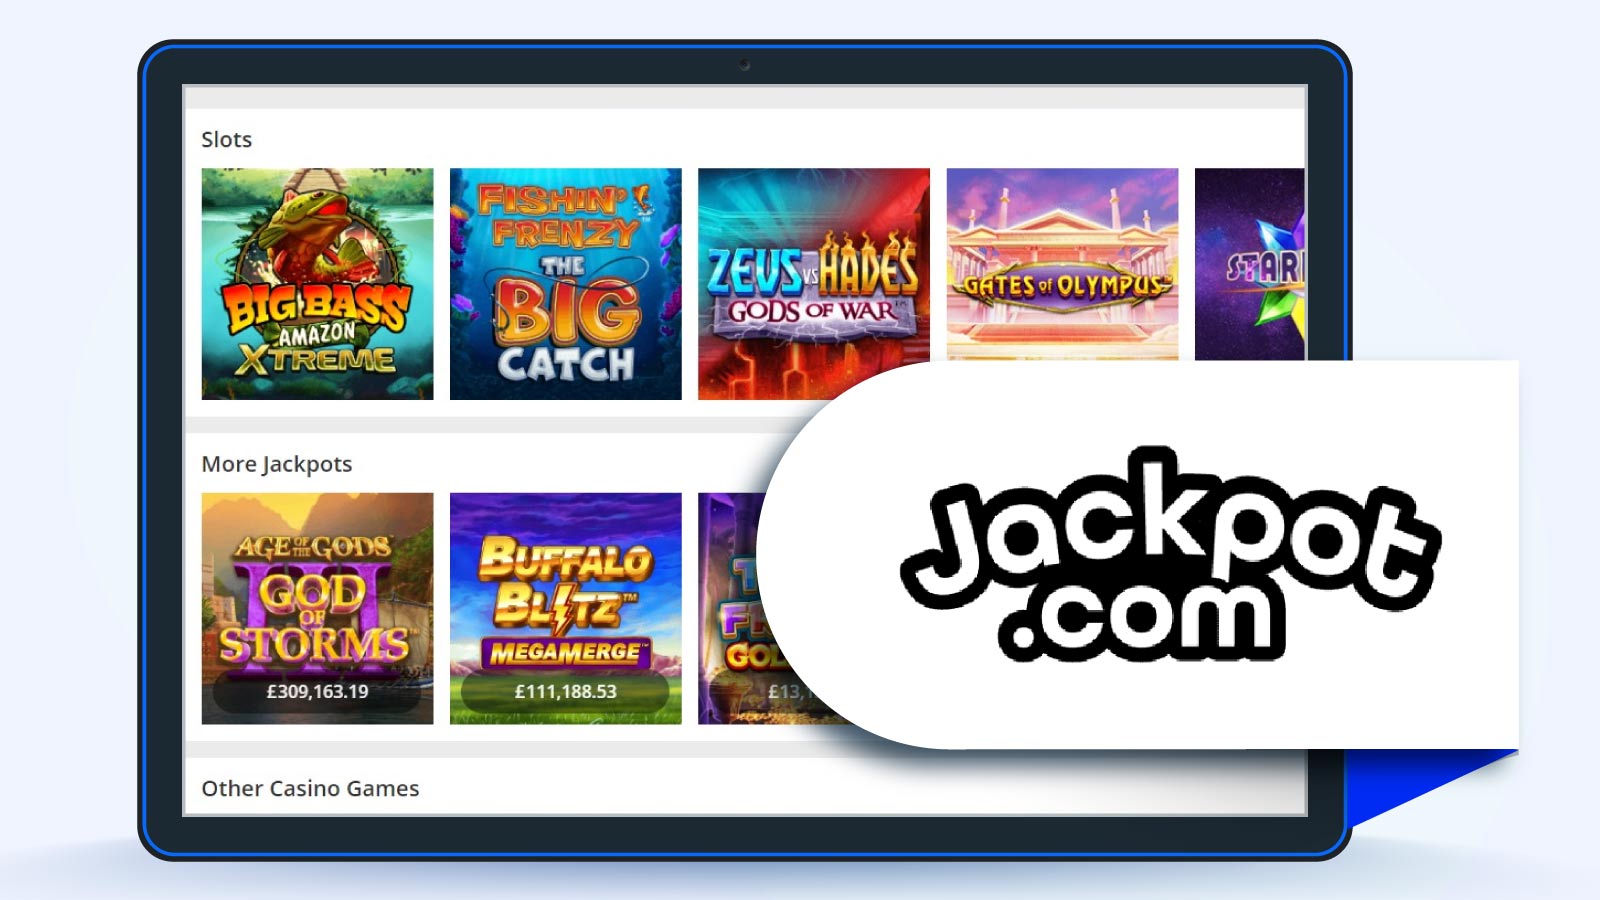 Jackpot.com – Best Boku Casino with Popular Games